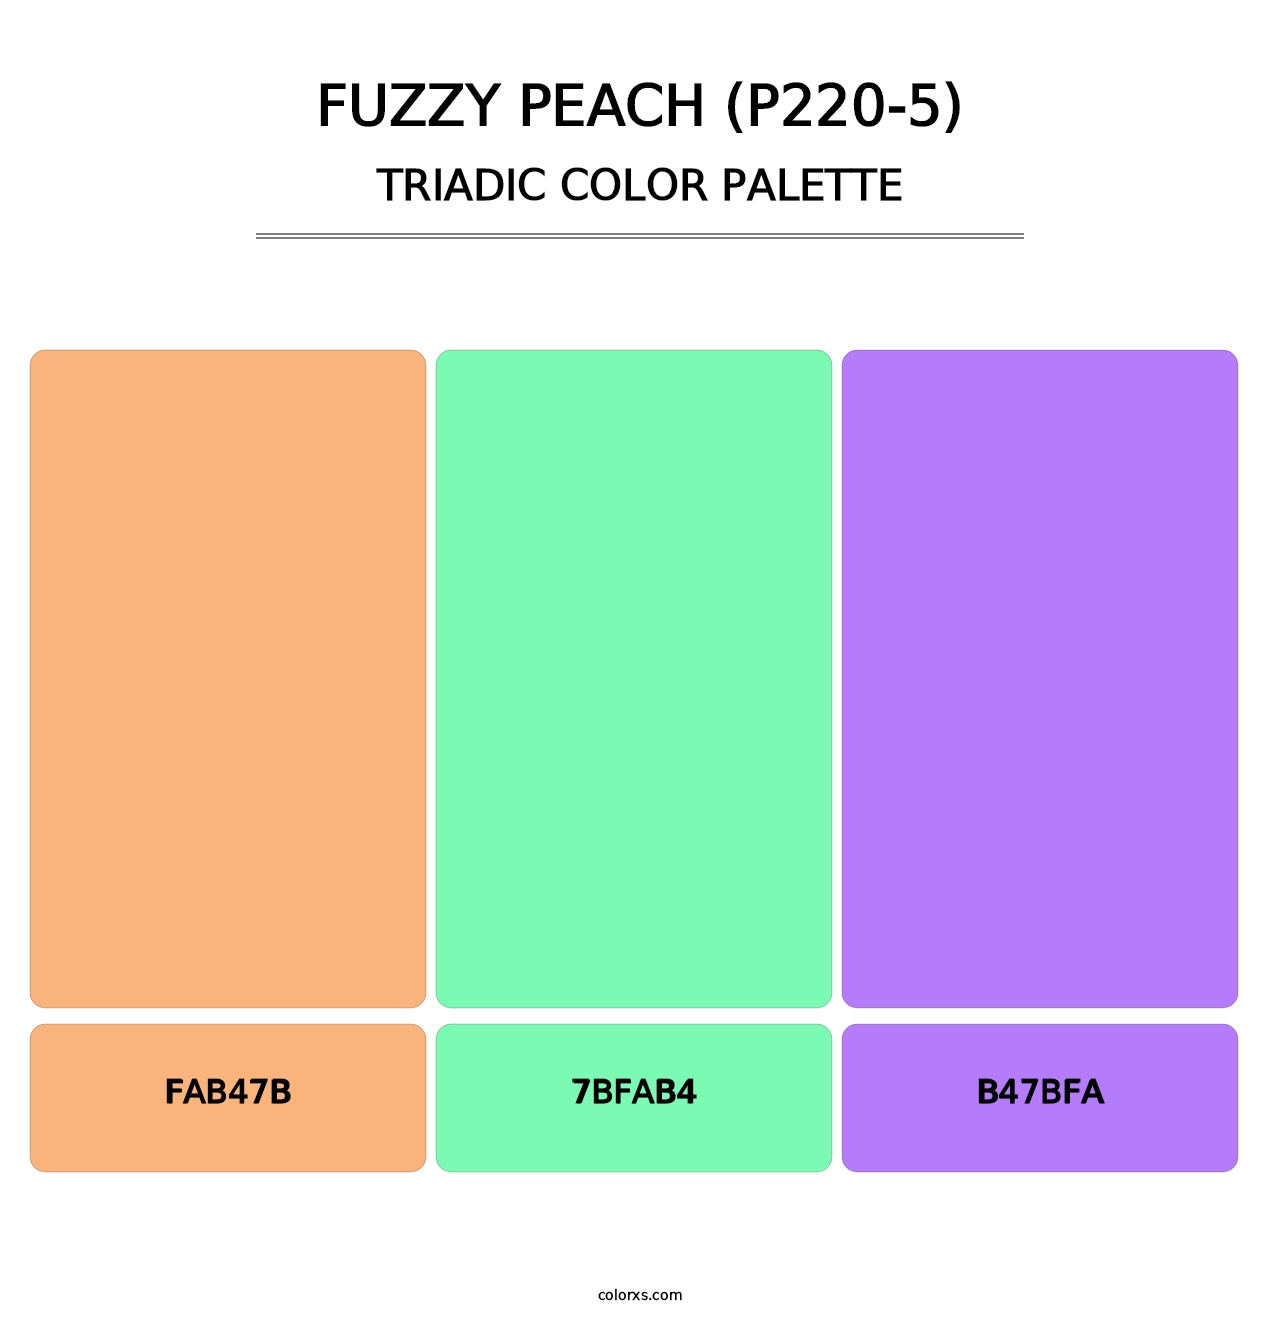 Fuzzy Peach (P220-5) - Triadic Color Palette